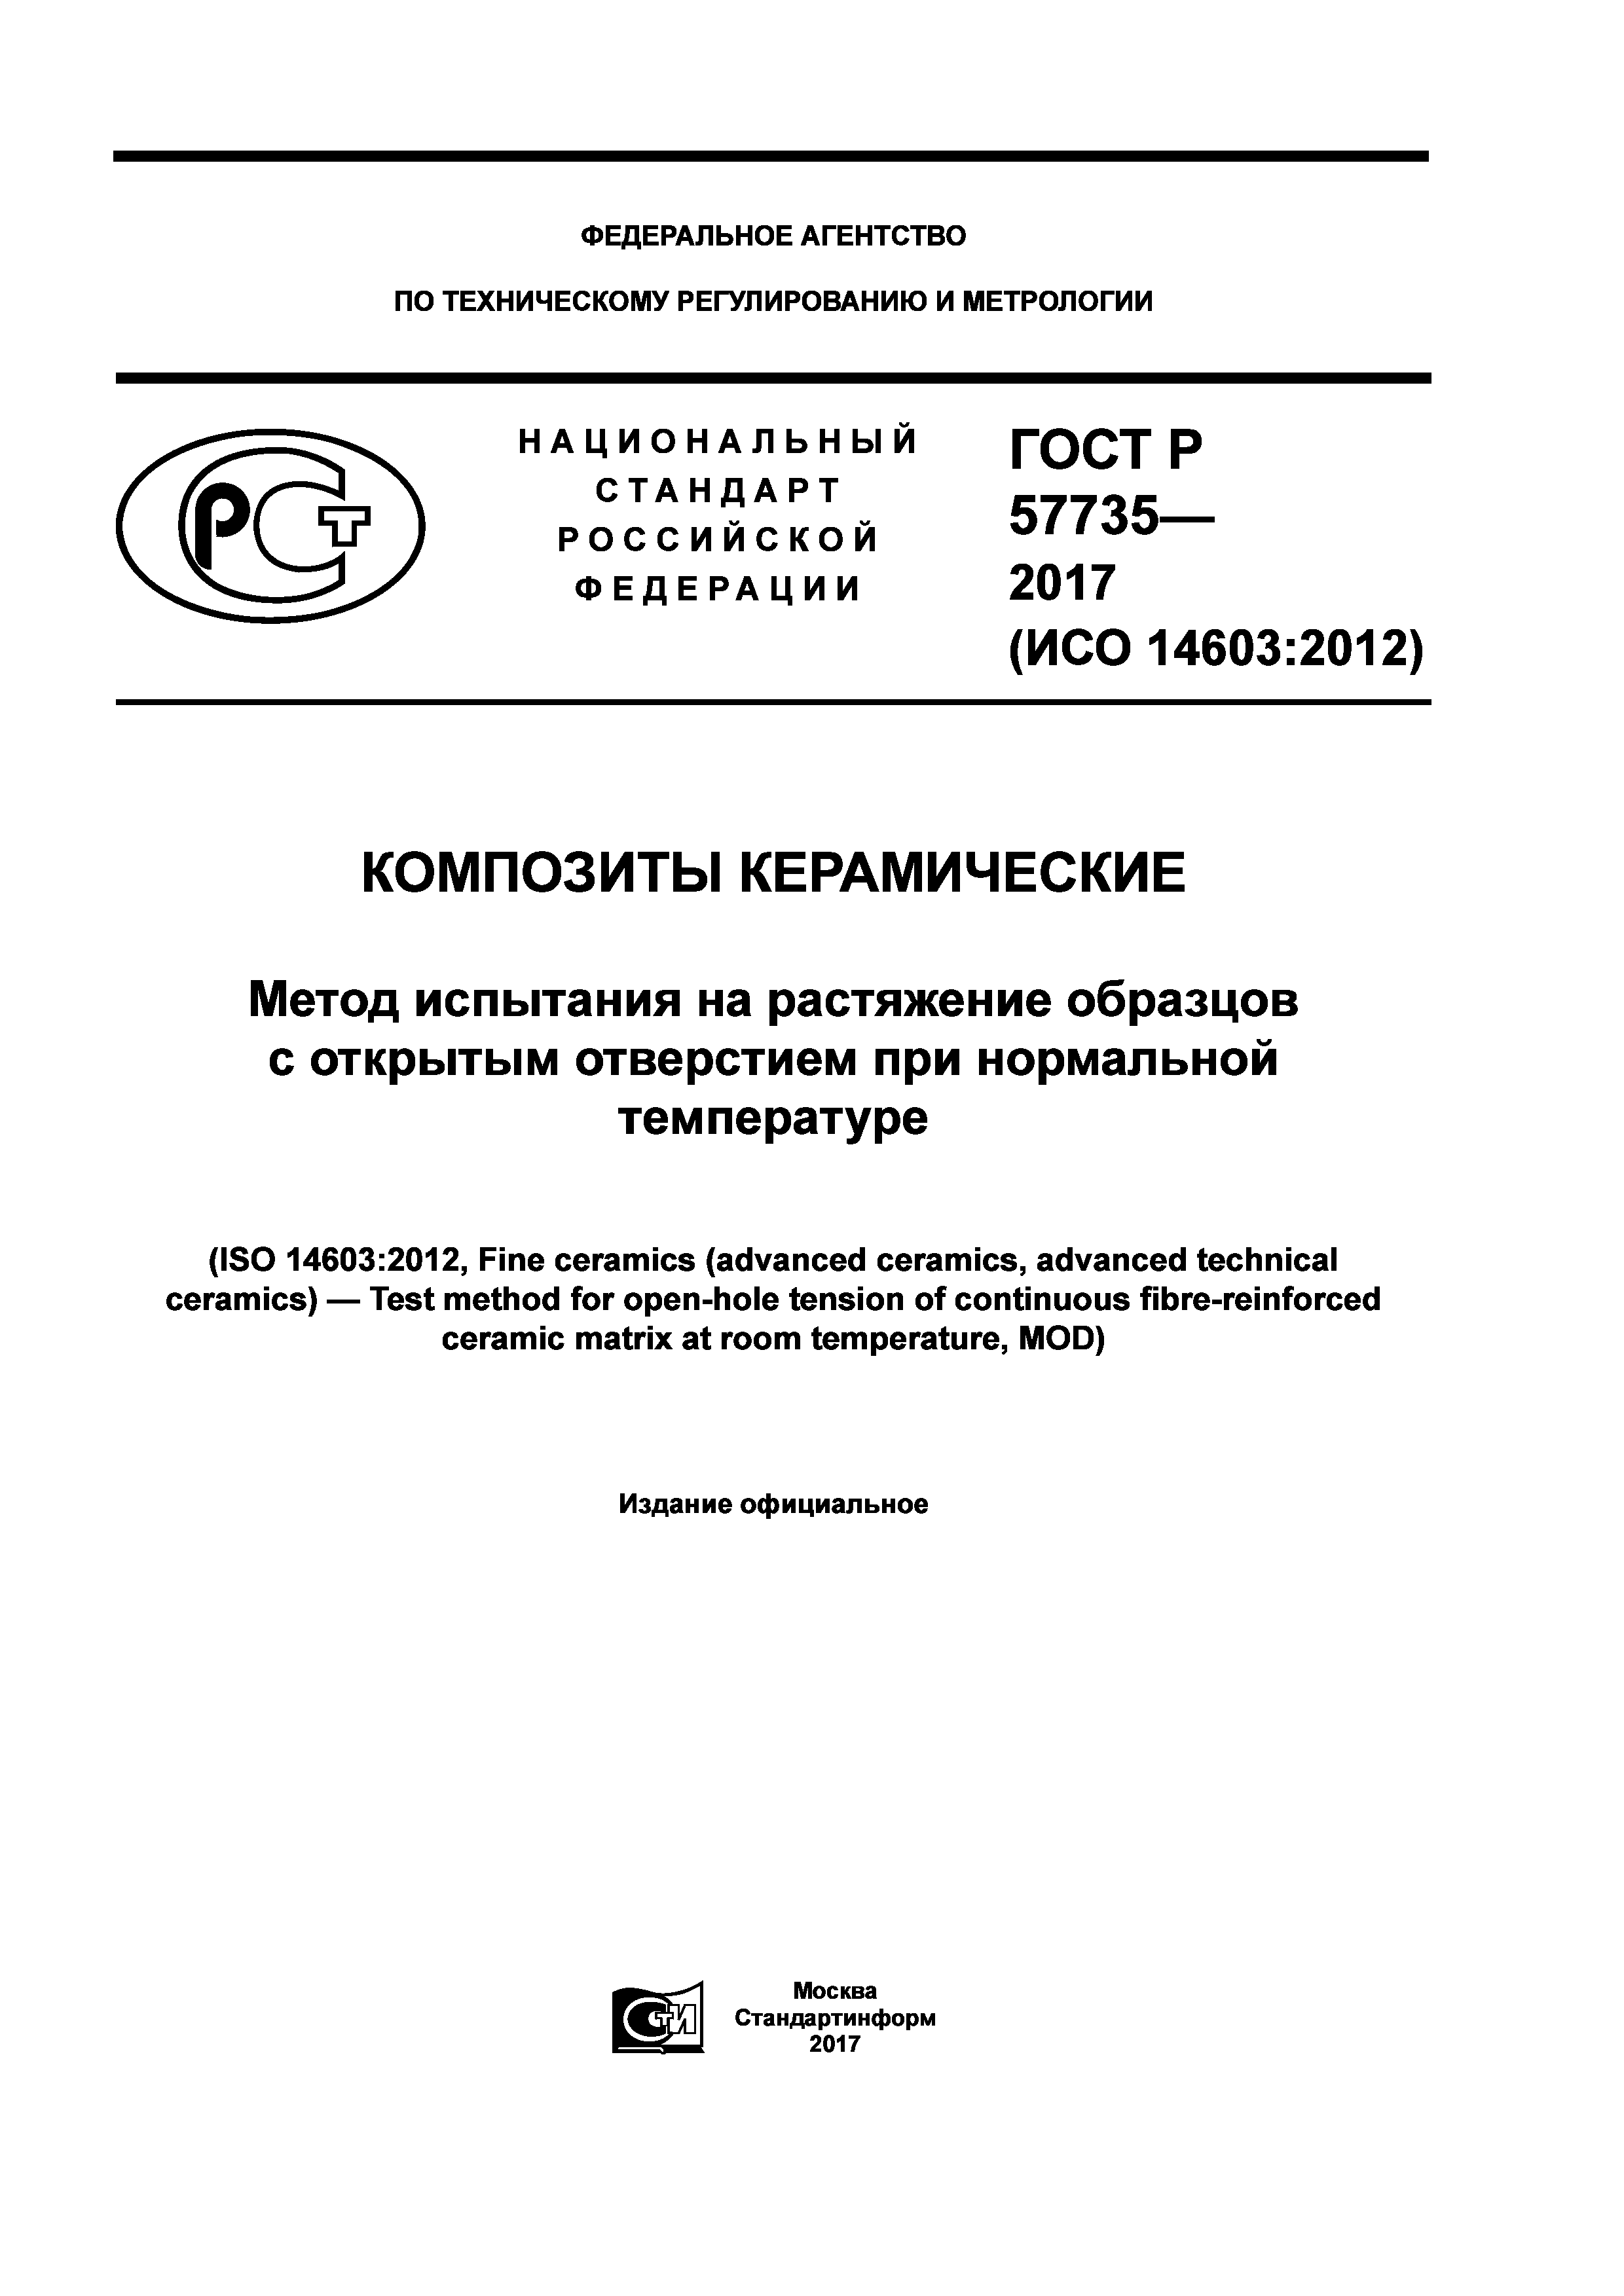 ГОСТ Р 57735-2017